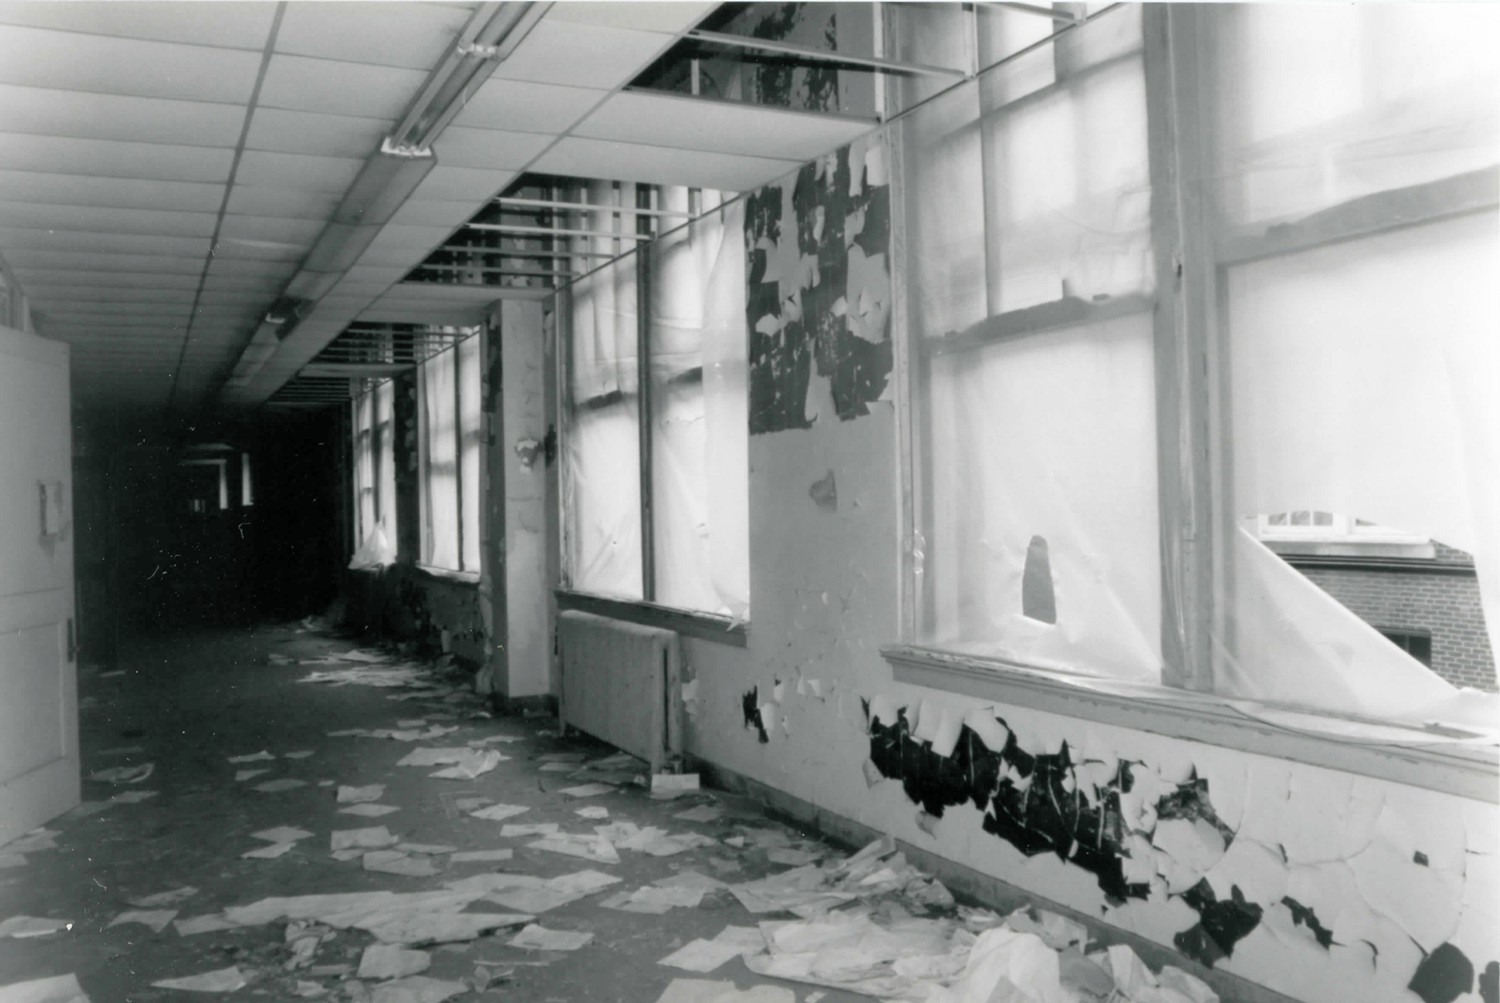 West Technical High School, Cleveland Ohio Hallway (2000)